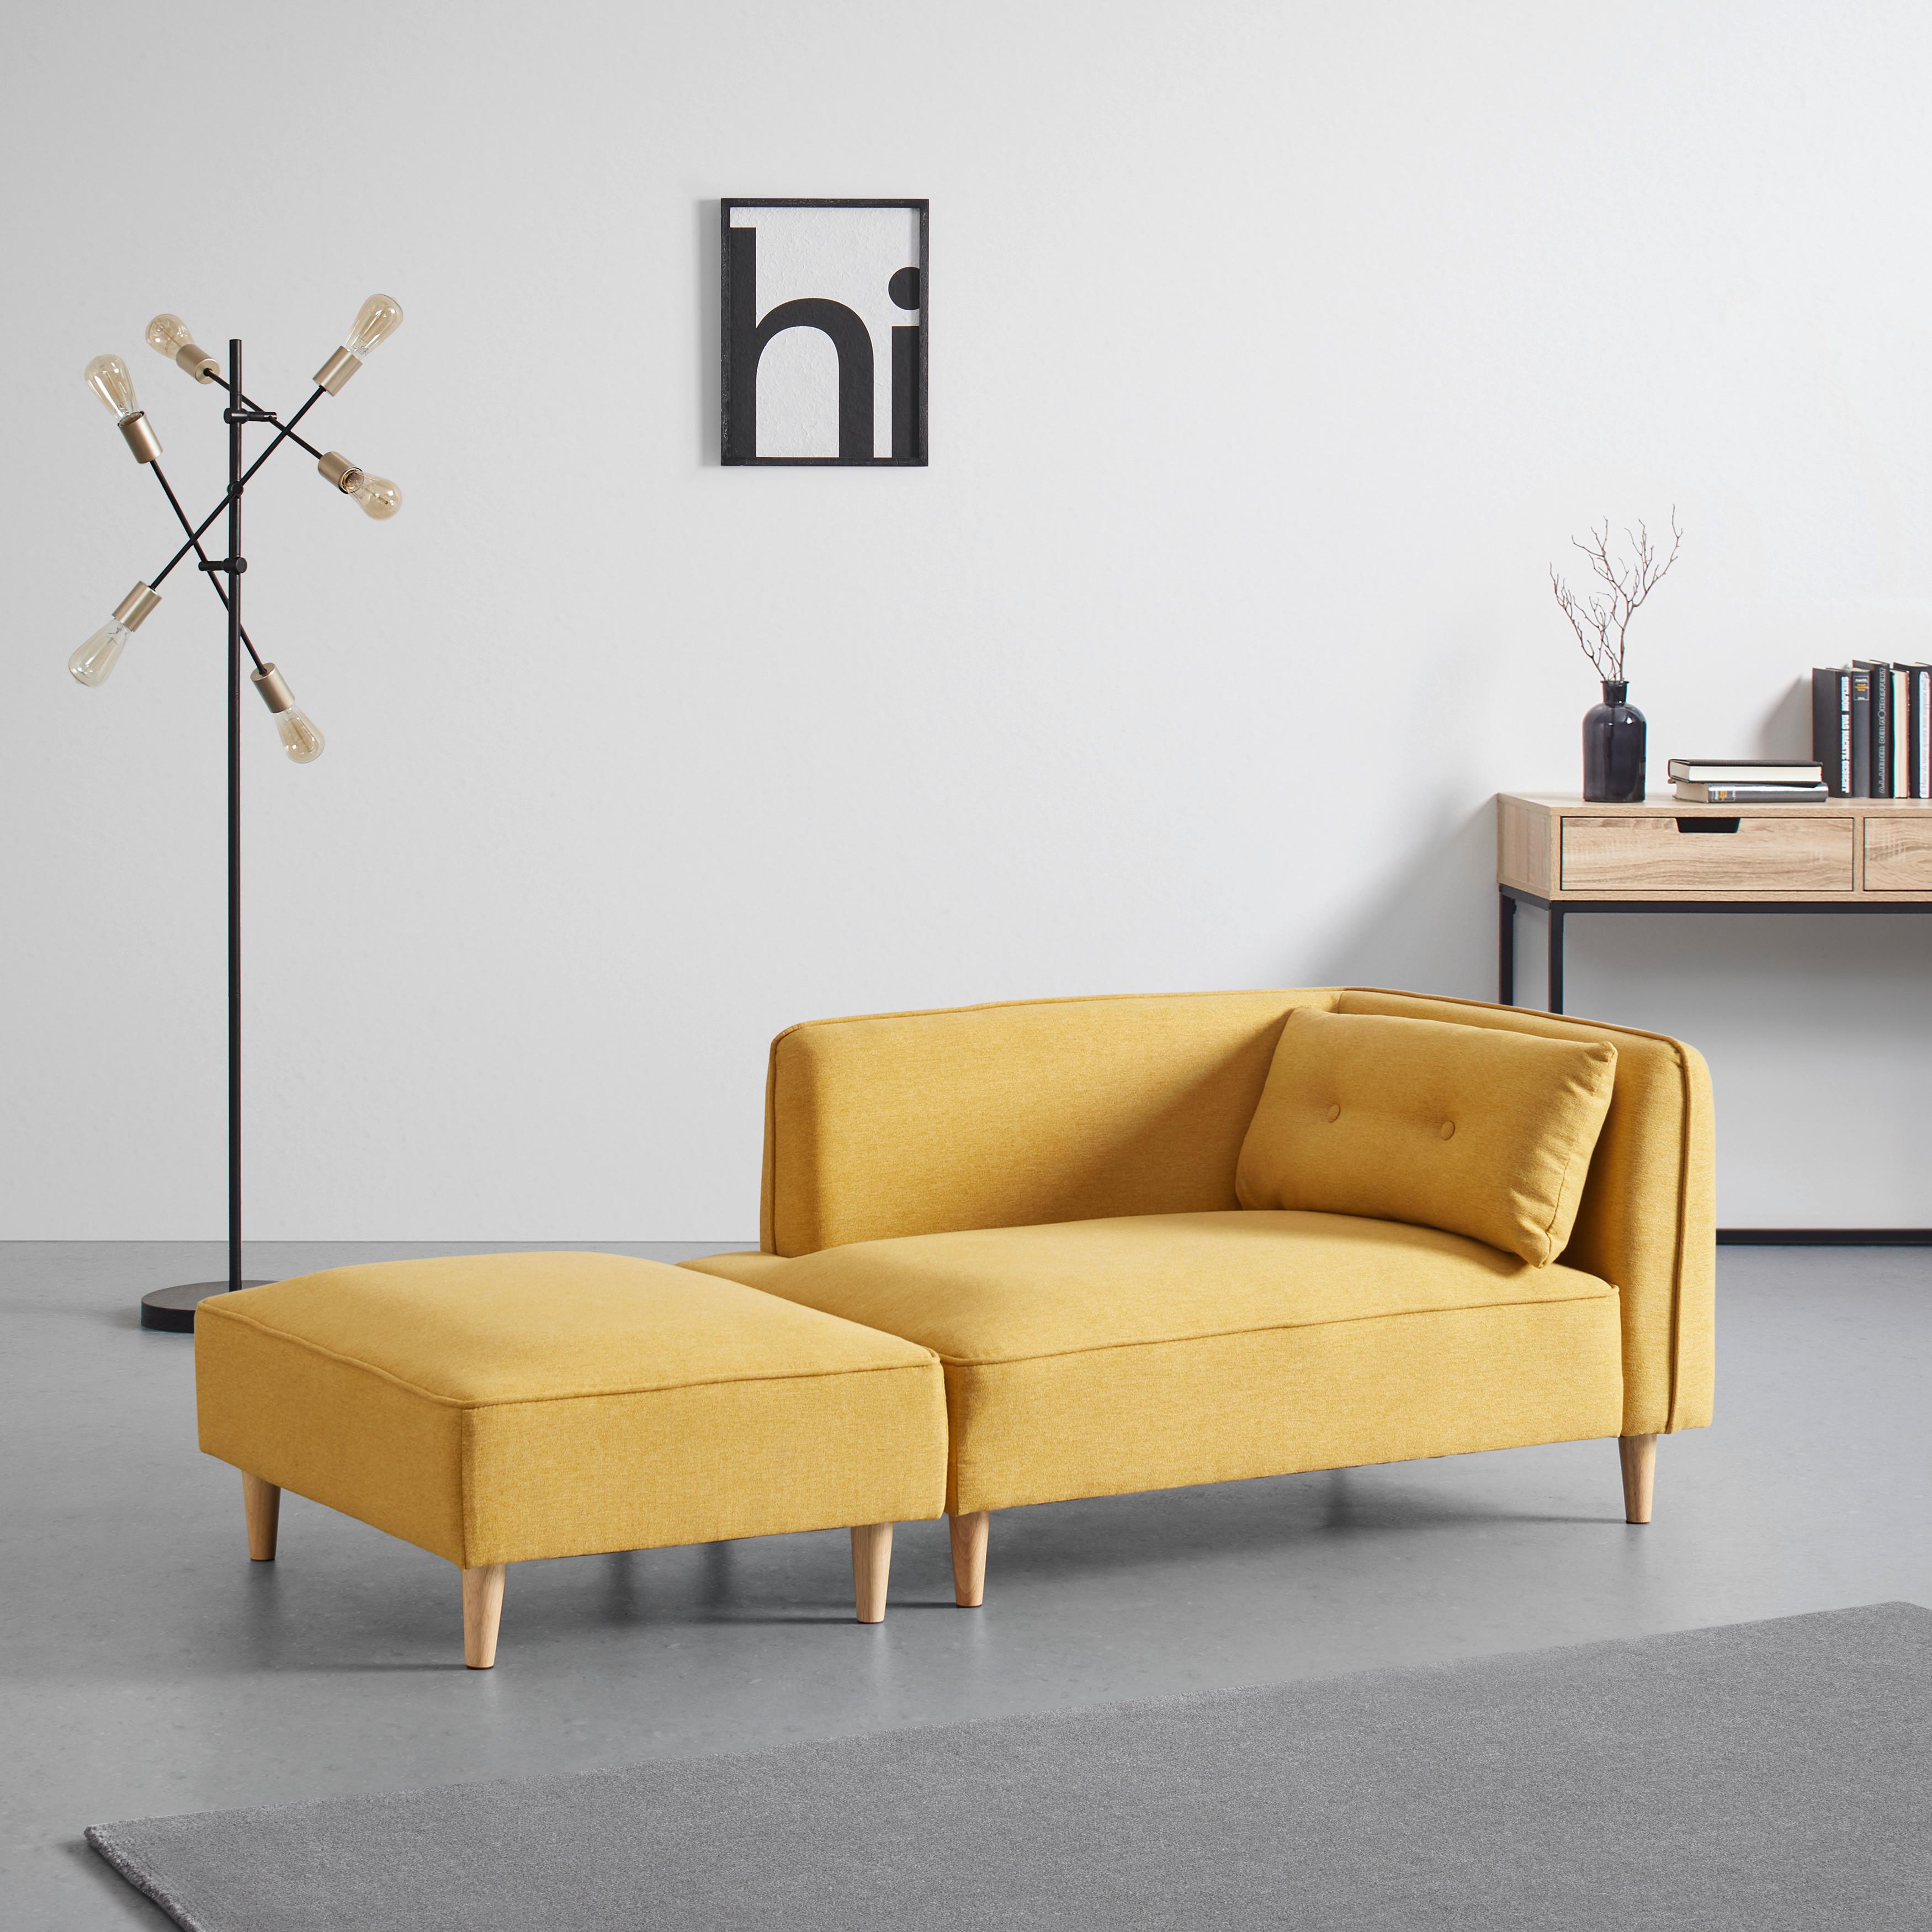 Modulares Sofa "Fanny" mit Hocker, gelb - Gelb/Naturfarben, MODERN, Holz/Textil (154/55/73cm) - Bessagi Home